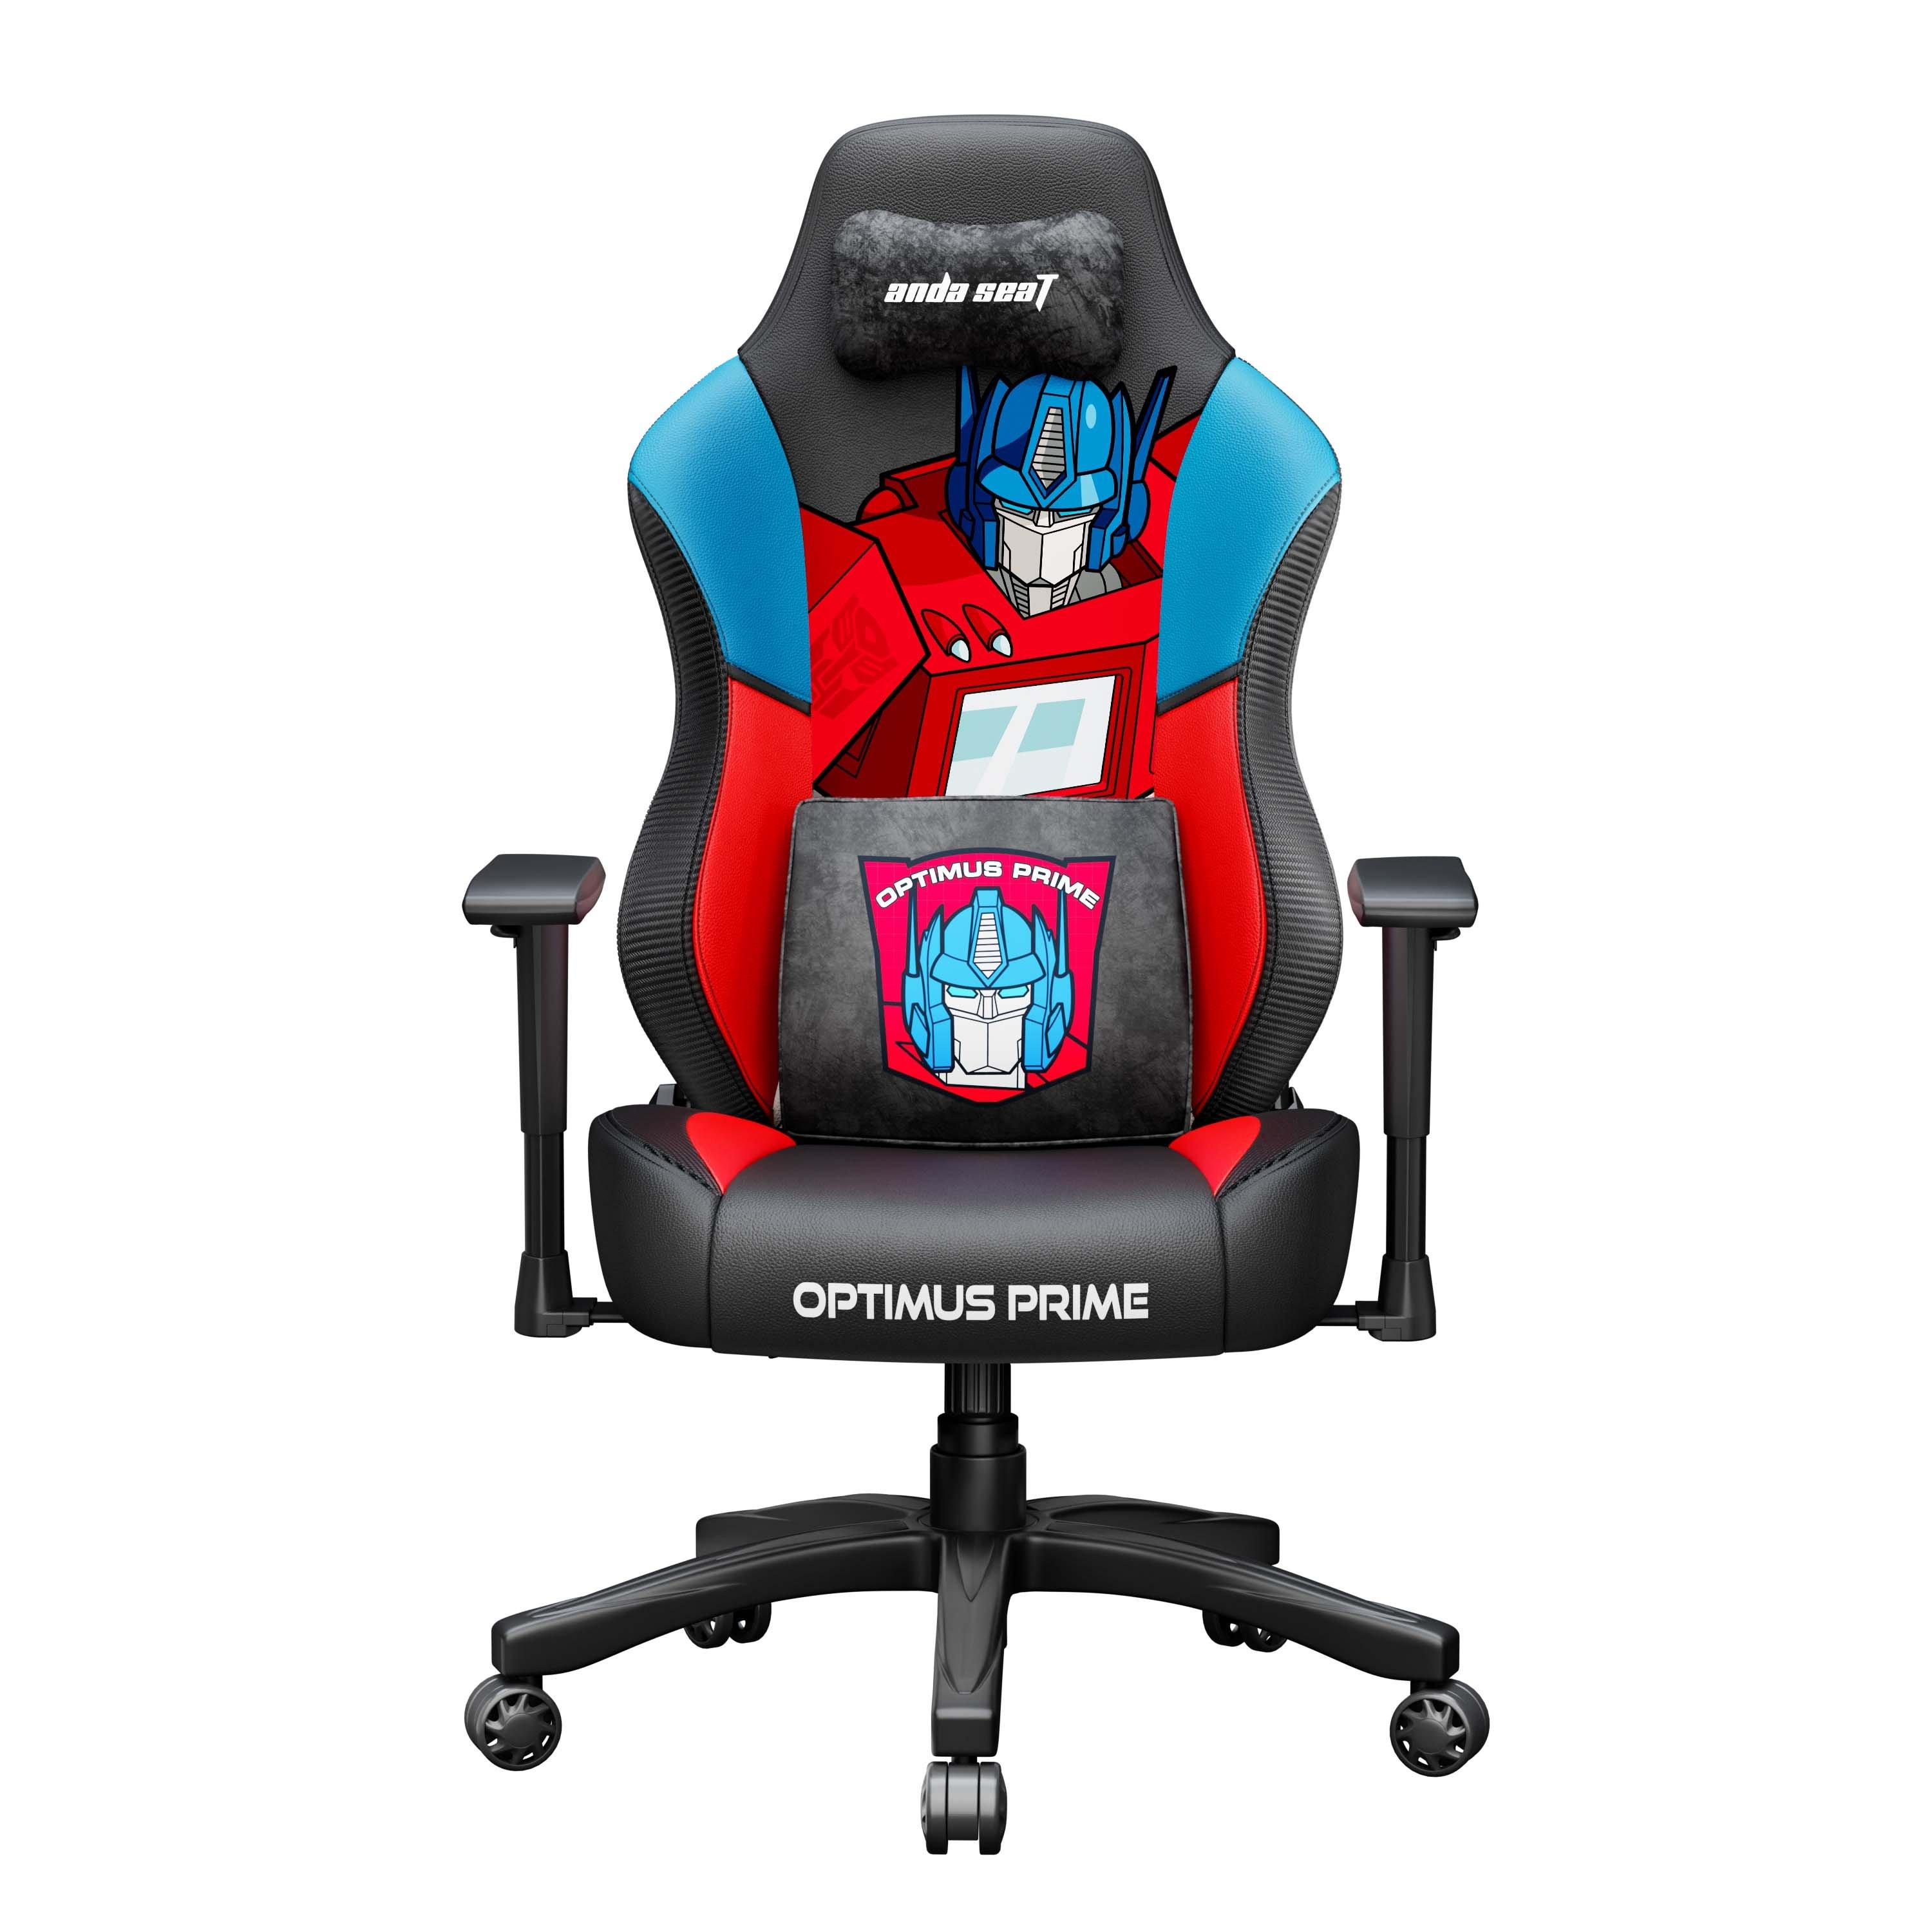 Andaseat Optimus Prime Edition Premium Gaming Chair | GameStop